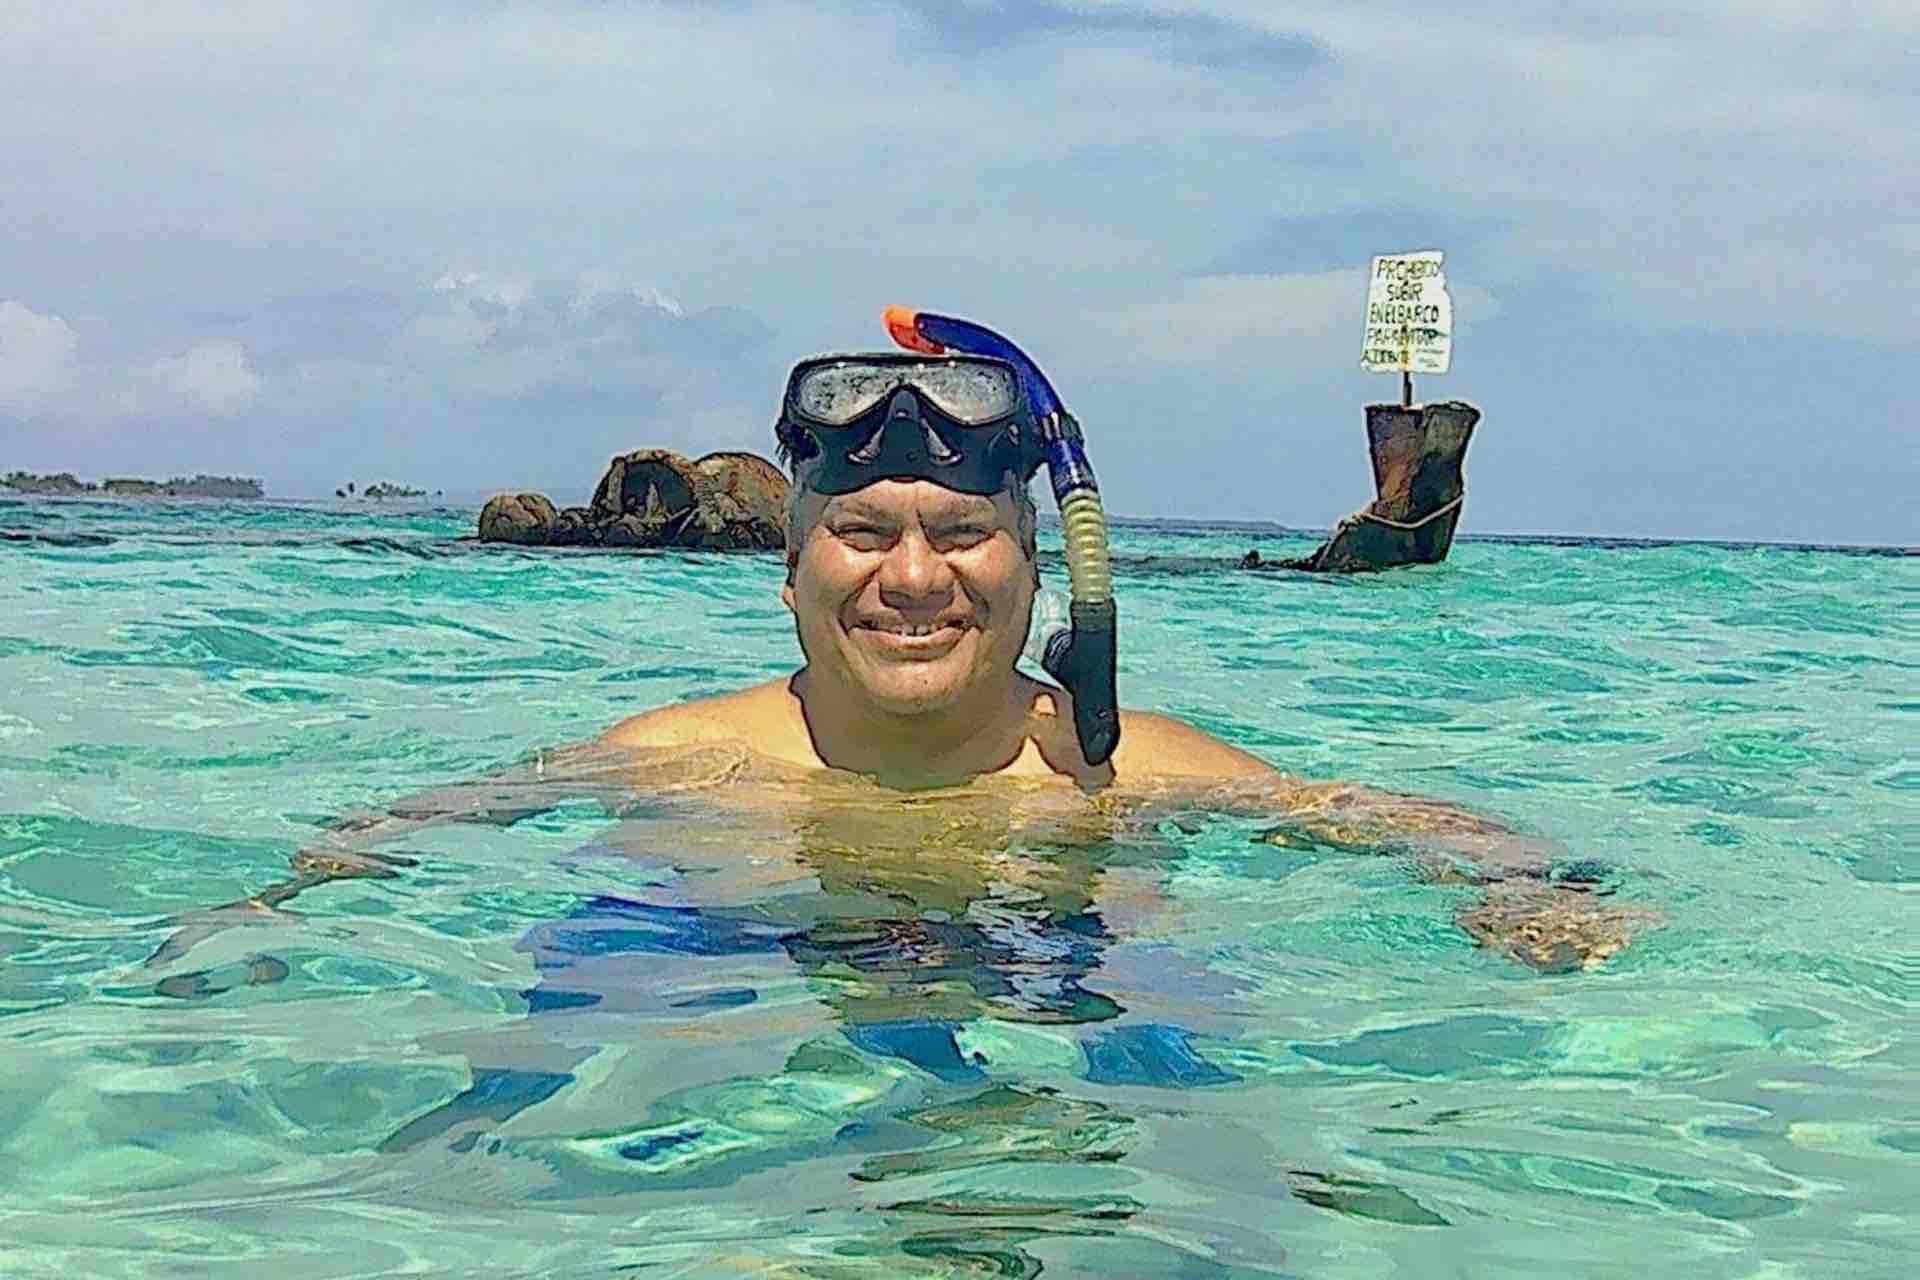 San Blas islands island hopping beach day tour isla perro shipwreck snorkeling man